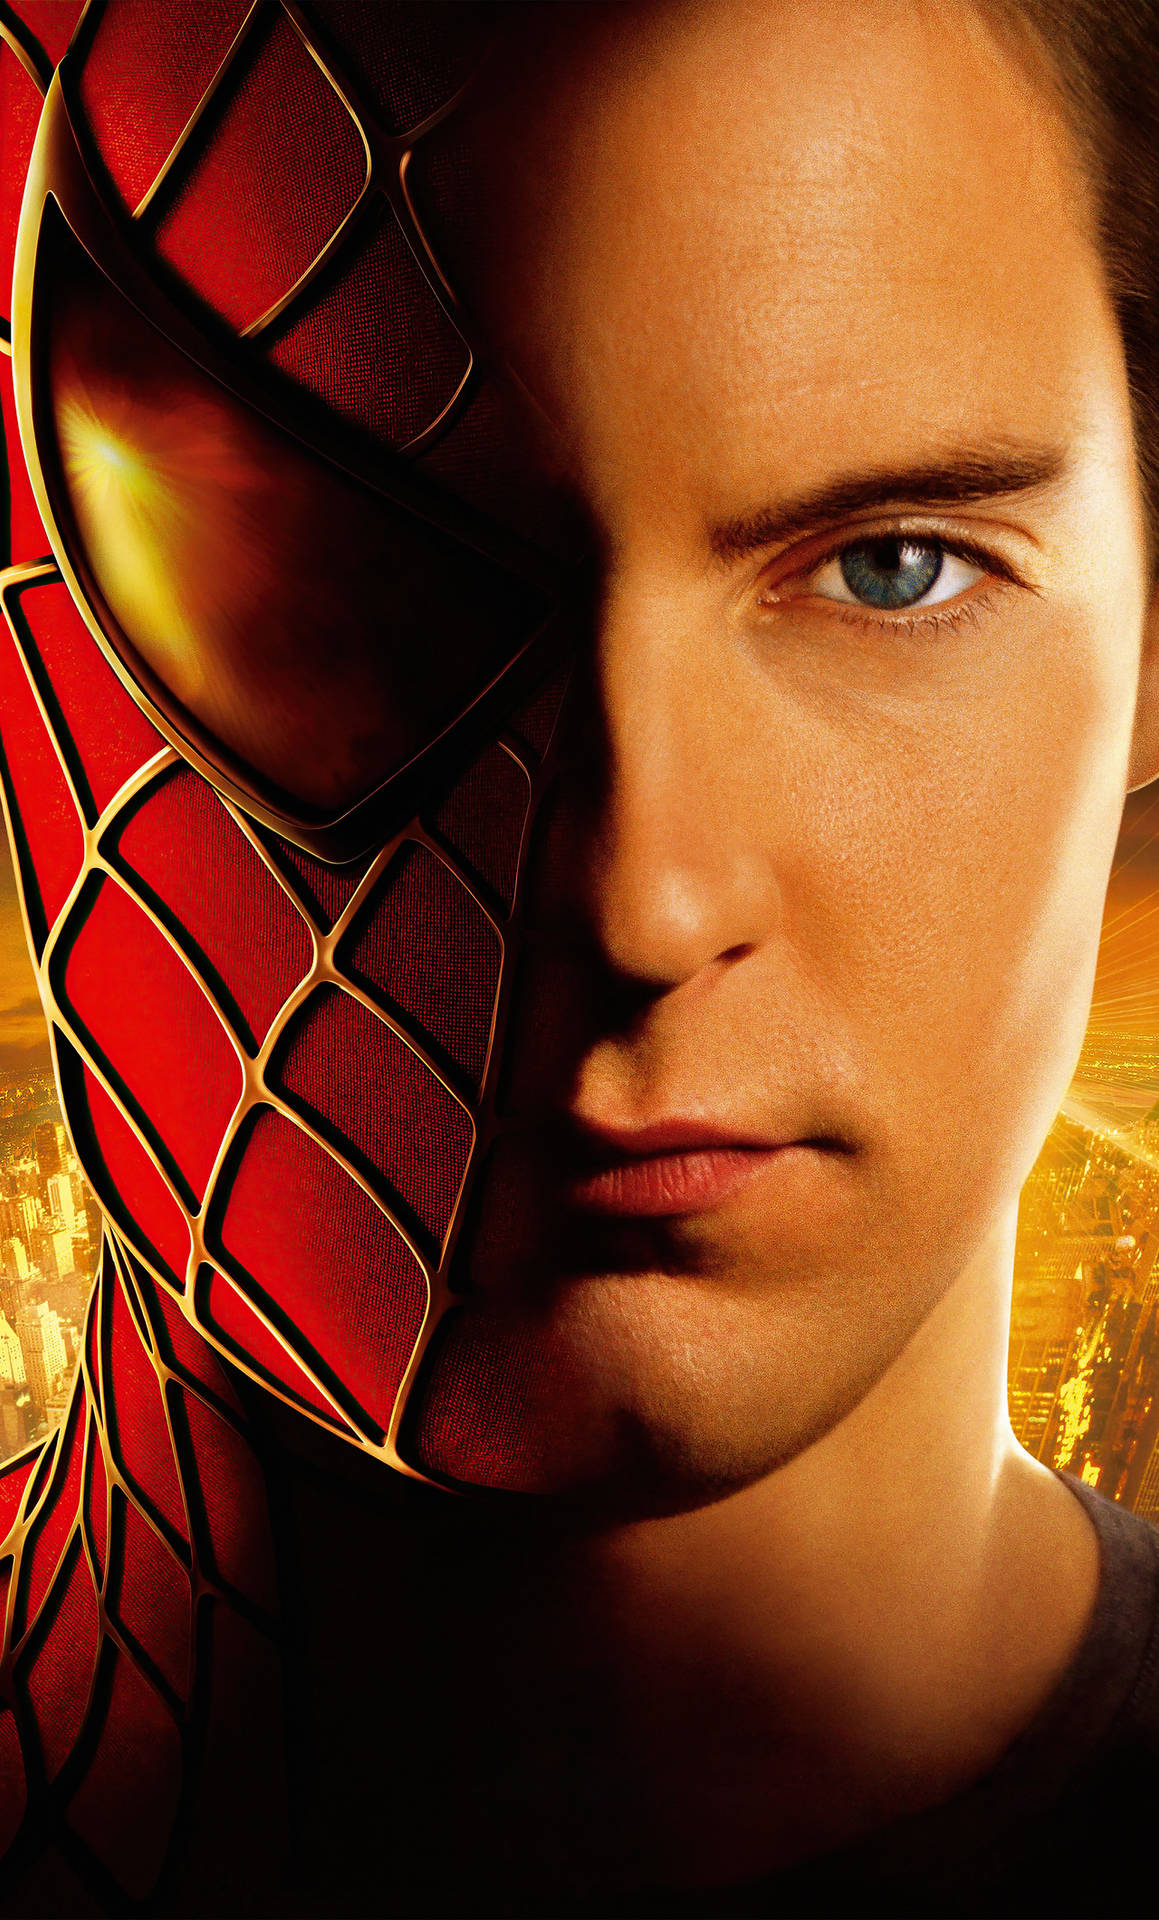 Tobey Maguire Wearing Half Spider-man Mask Background